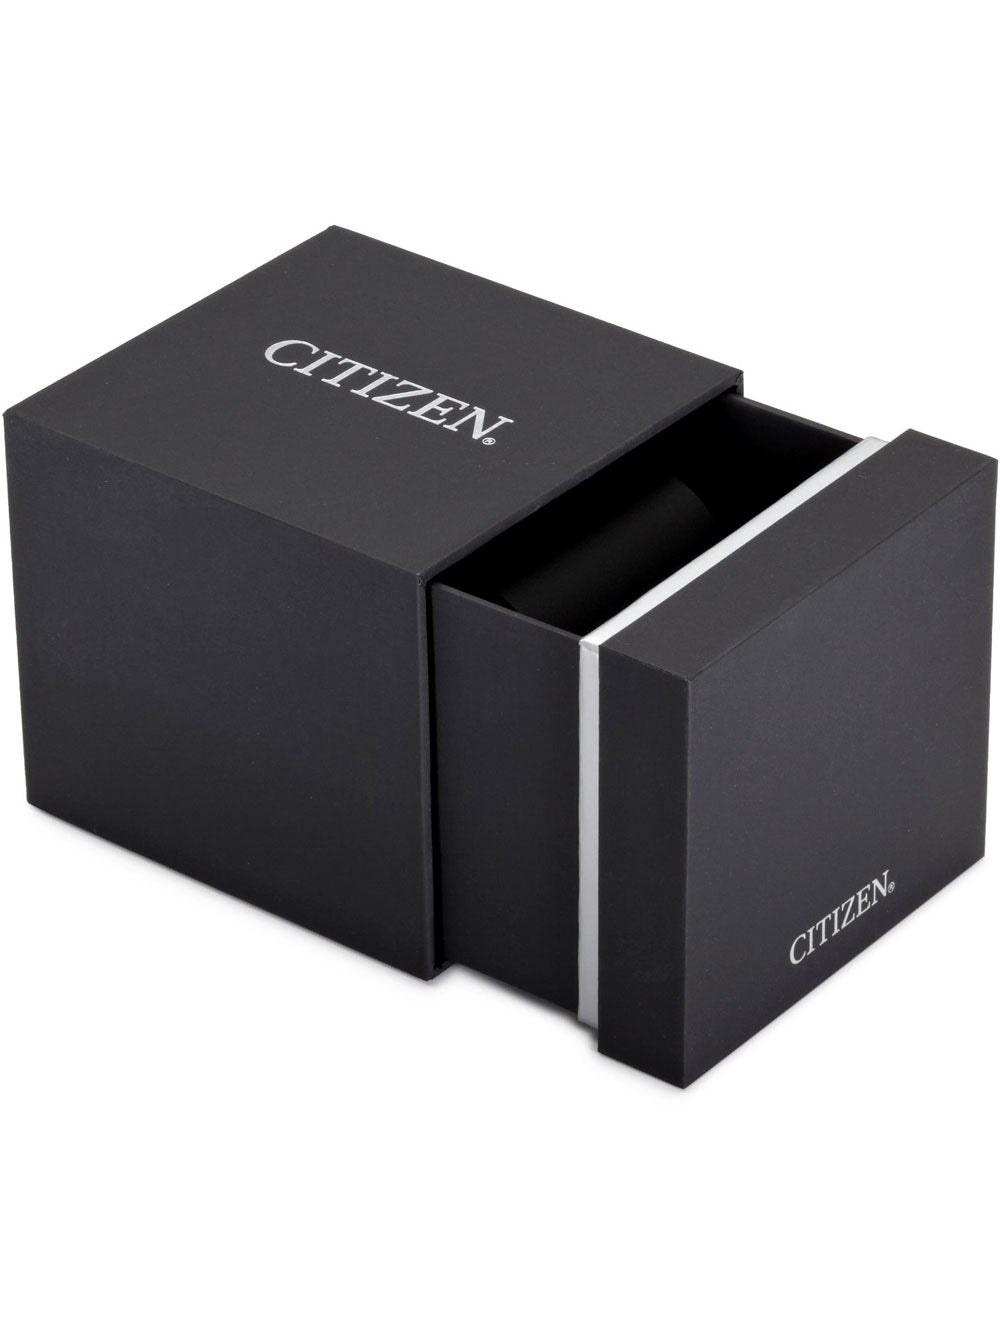 Citizen EM0554-82X Elegance Ladies 32mm 5ATM